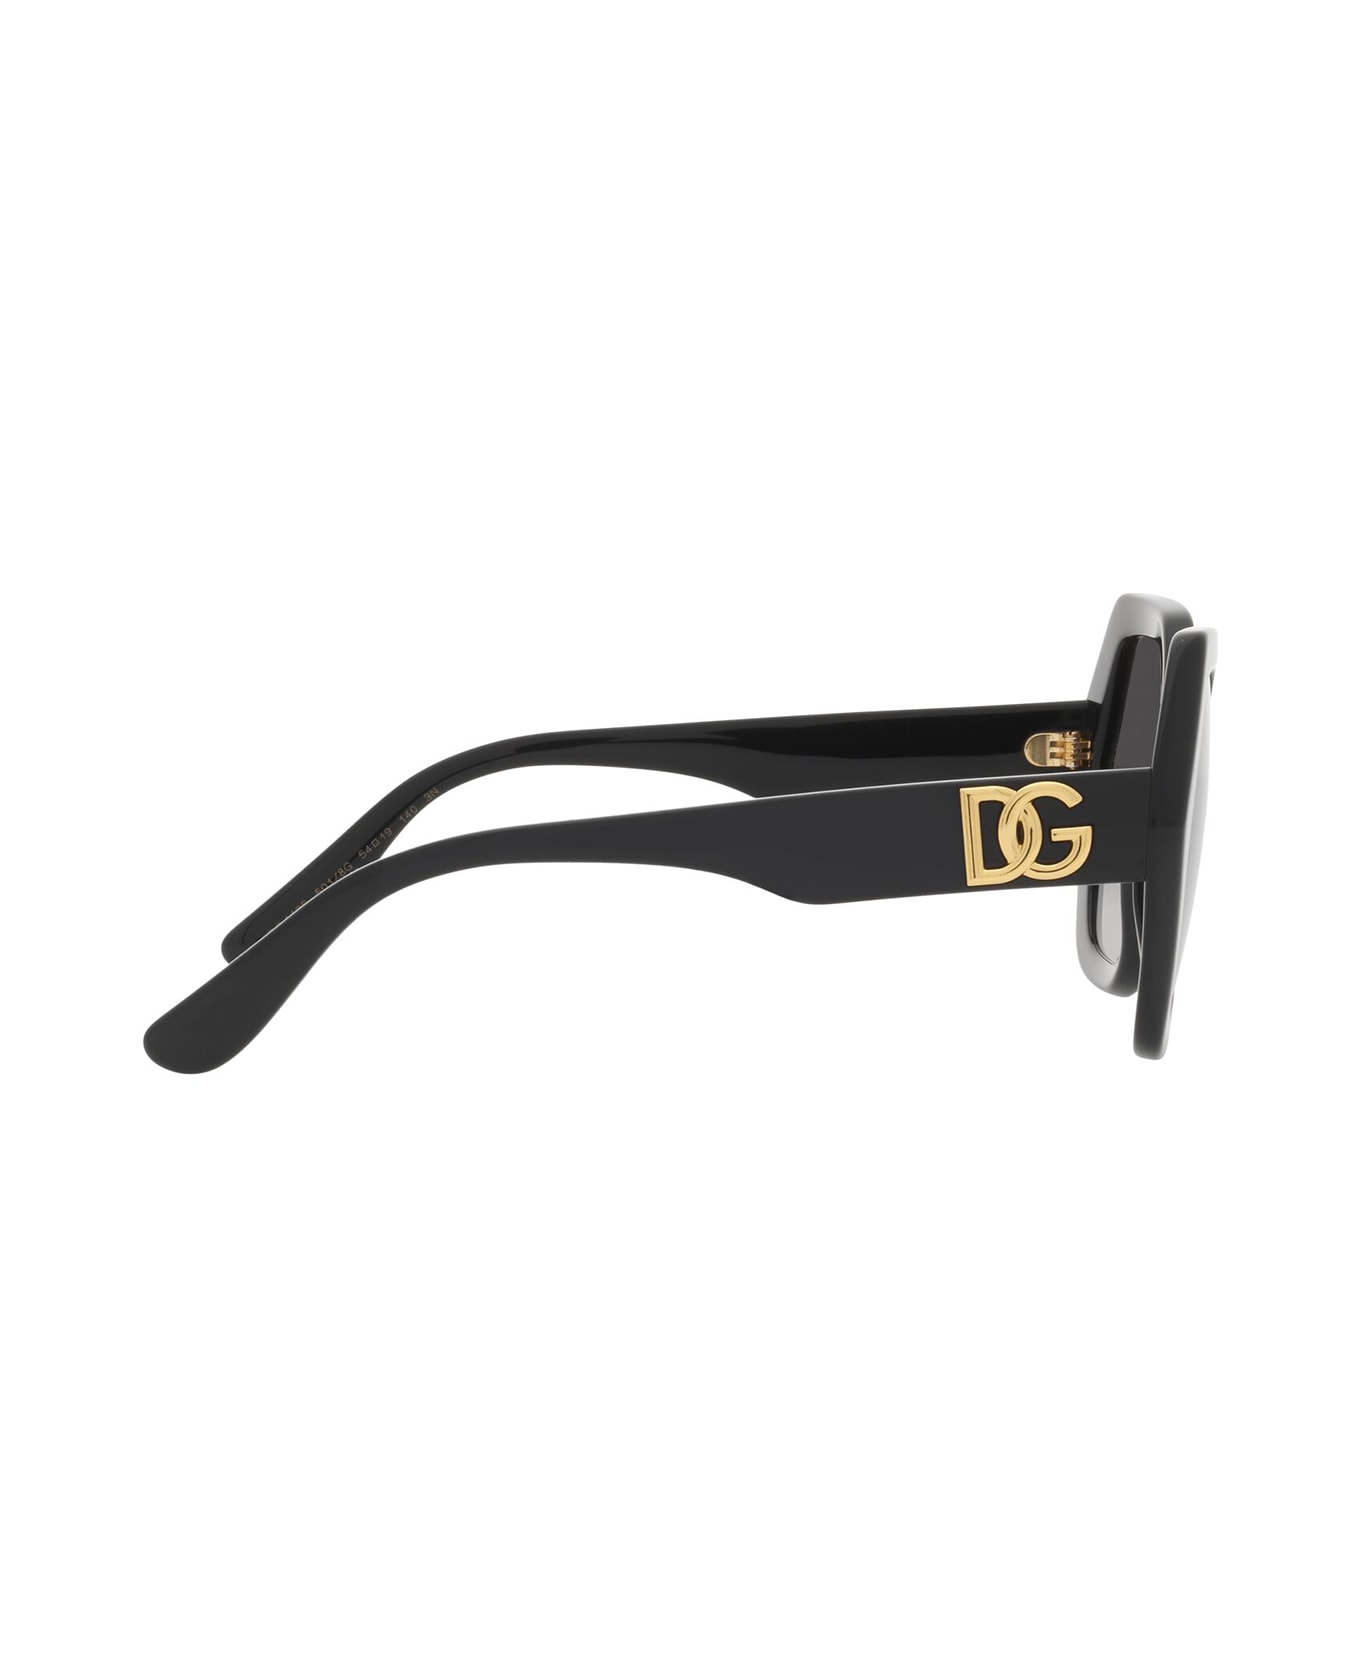 Dolce & Gabbana Eyewear Dg4406 Black Sunglasses - Black